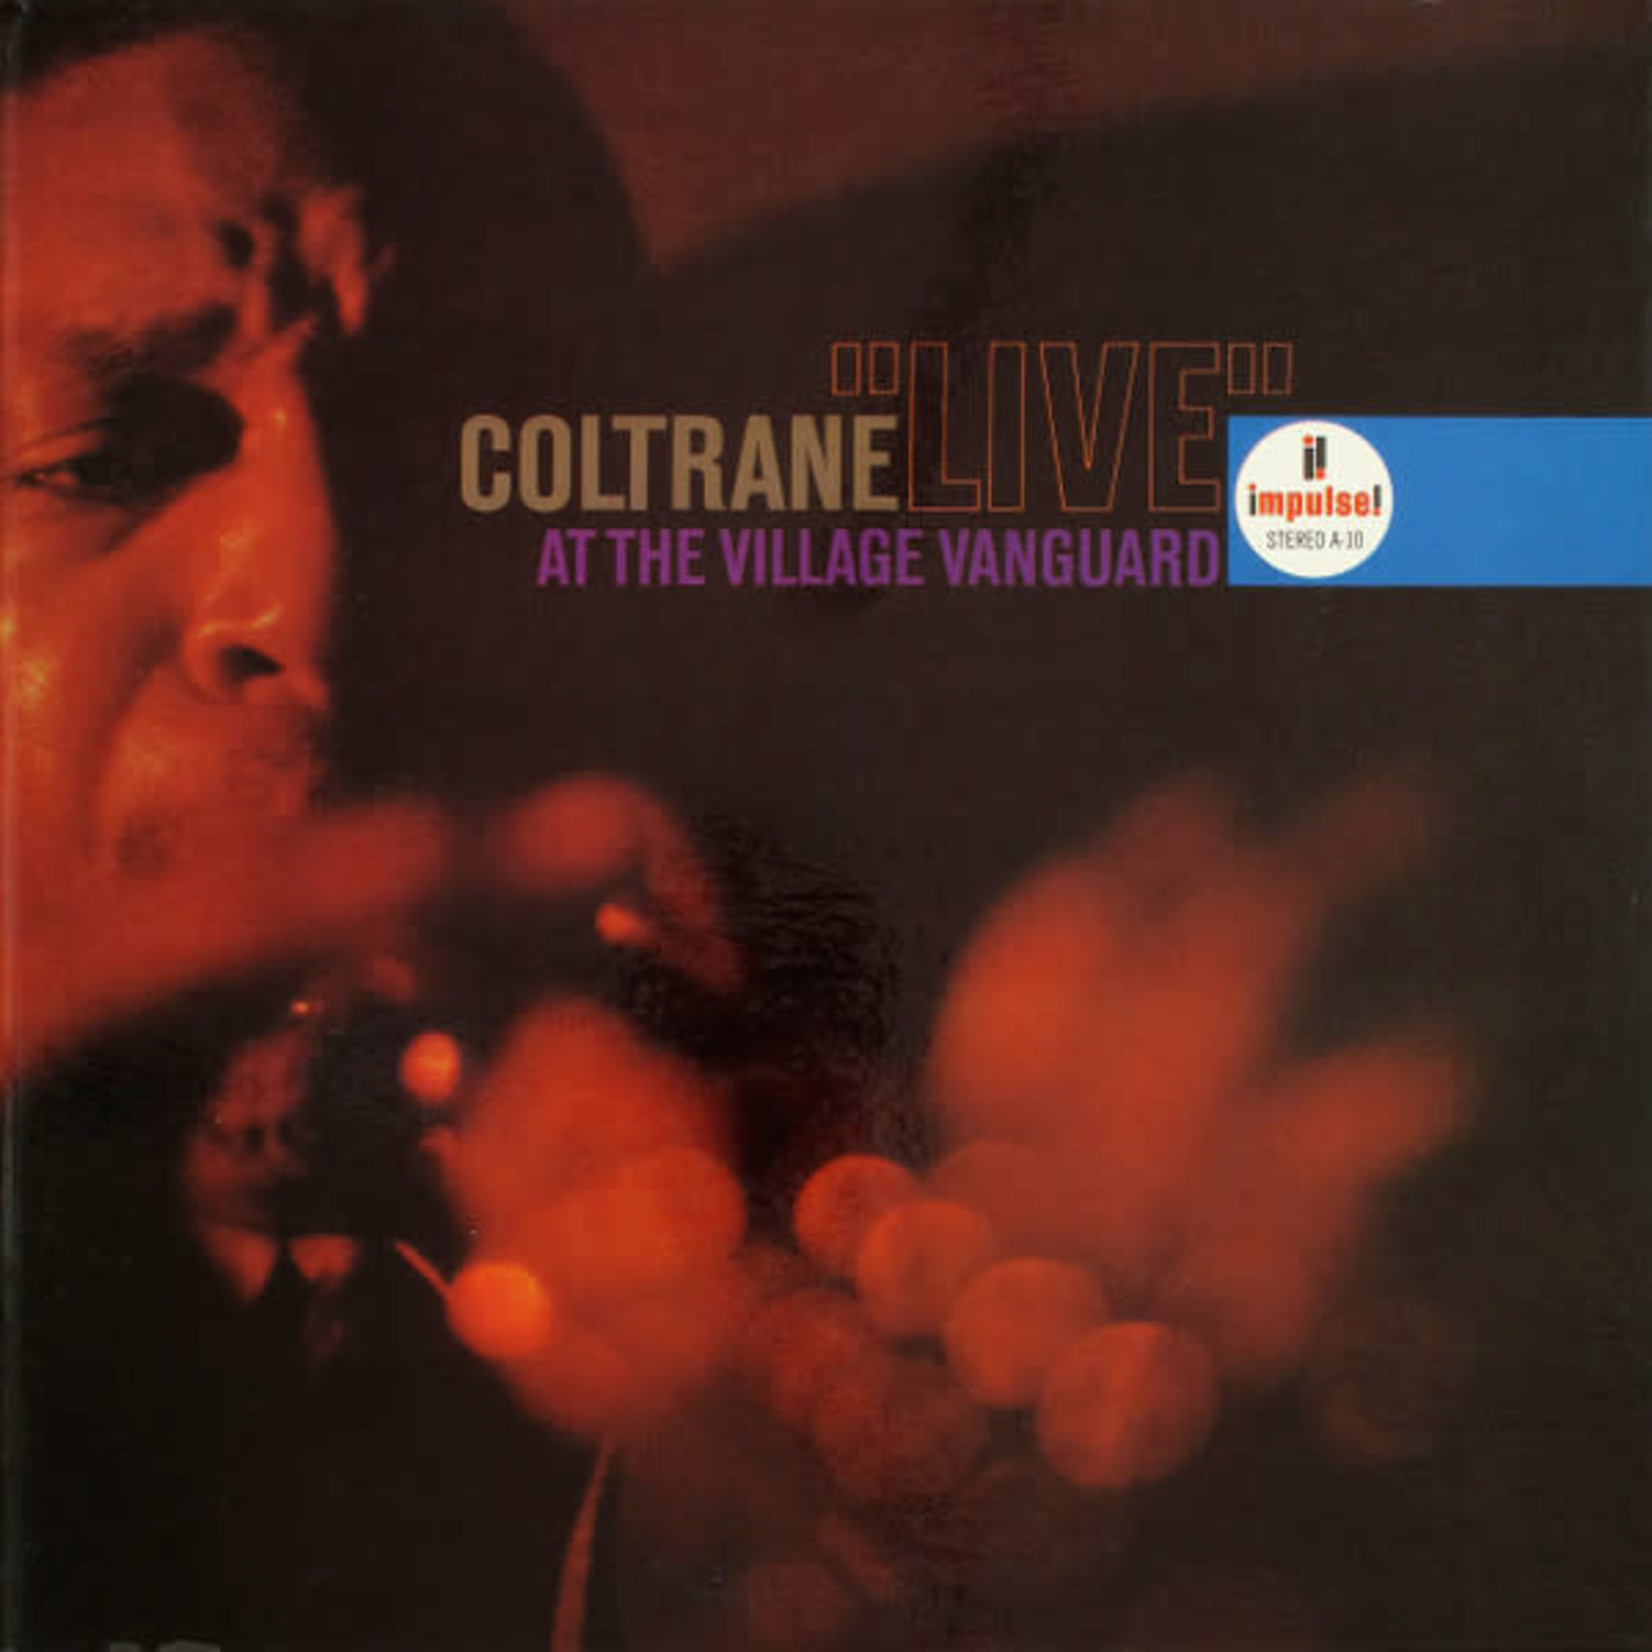 [New] John Coltrane - "Live" At The Village Vanguard (Verve Acoustic Sound Series)